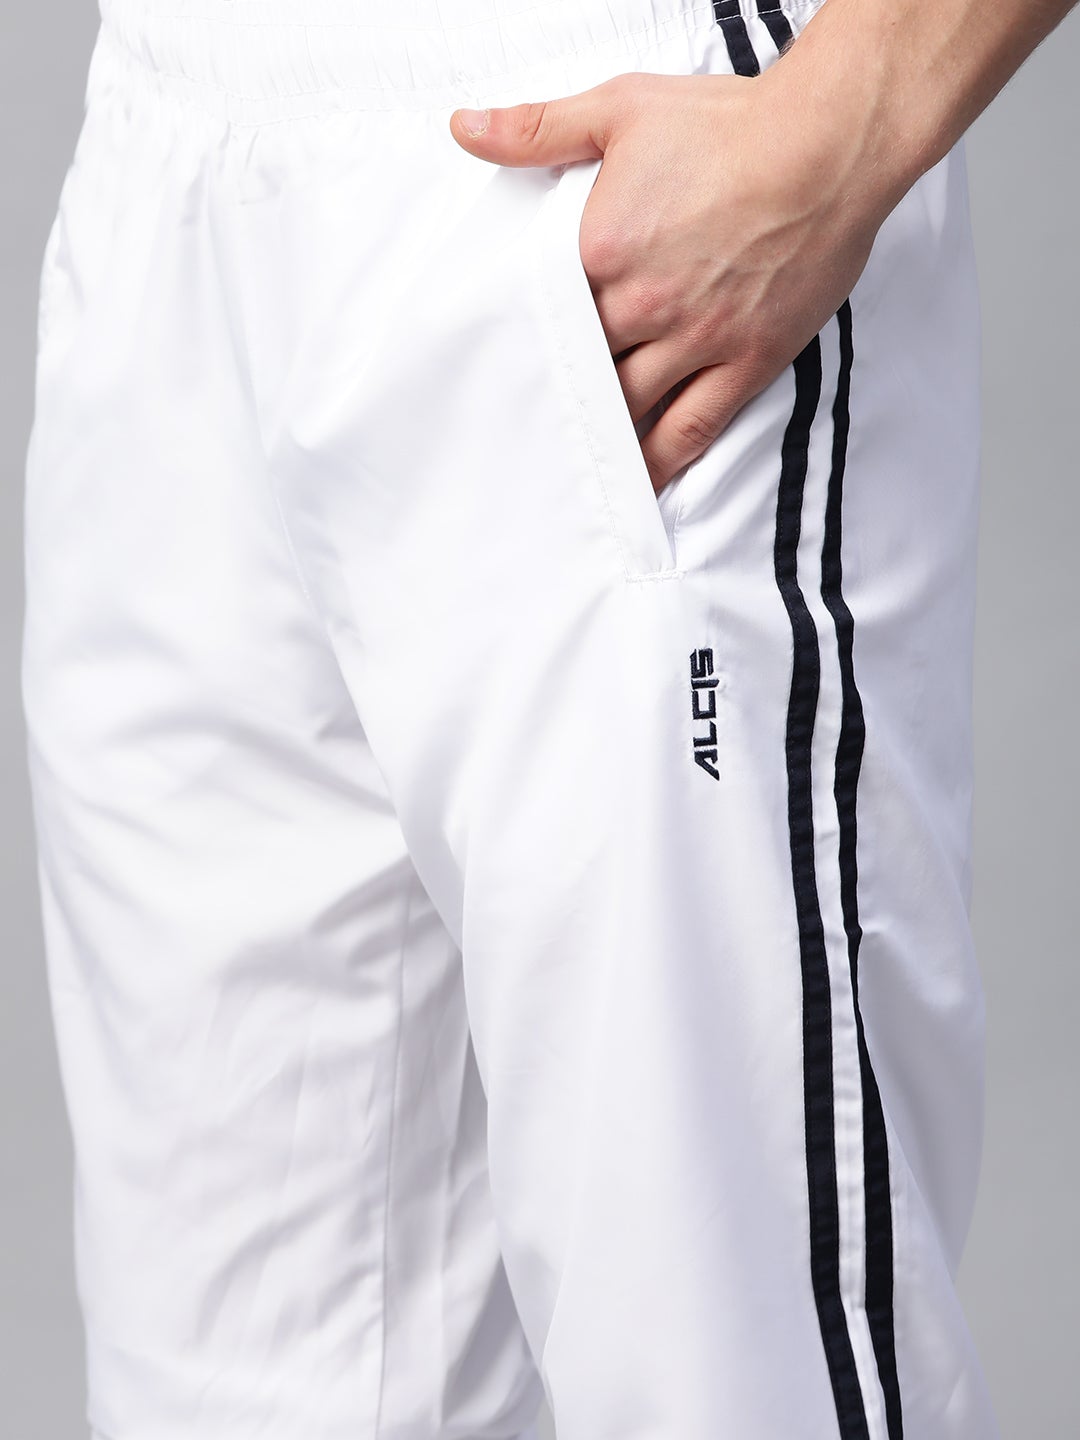 Alcis Men Solid White Track Suit